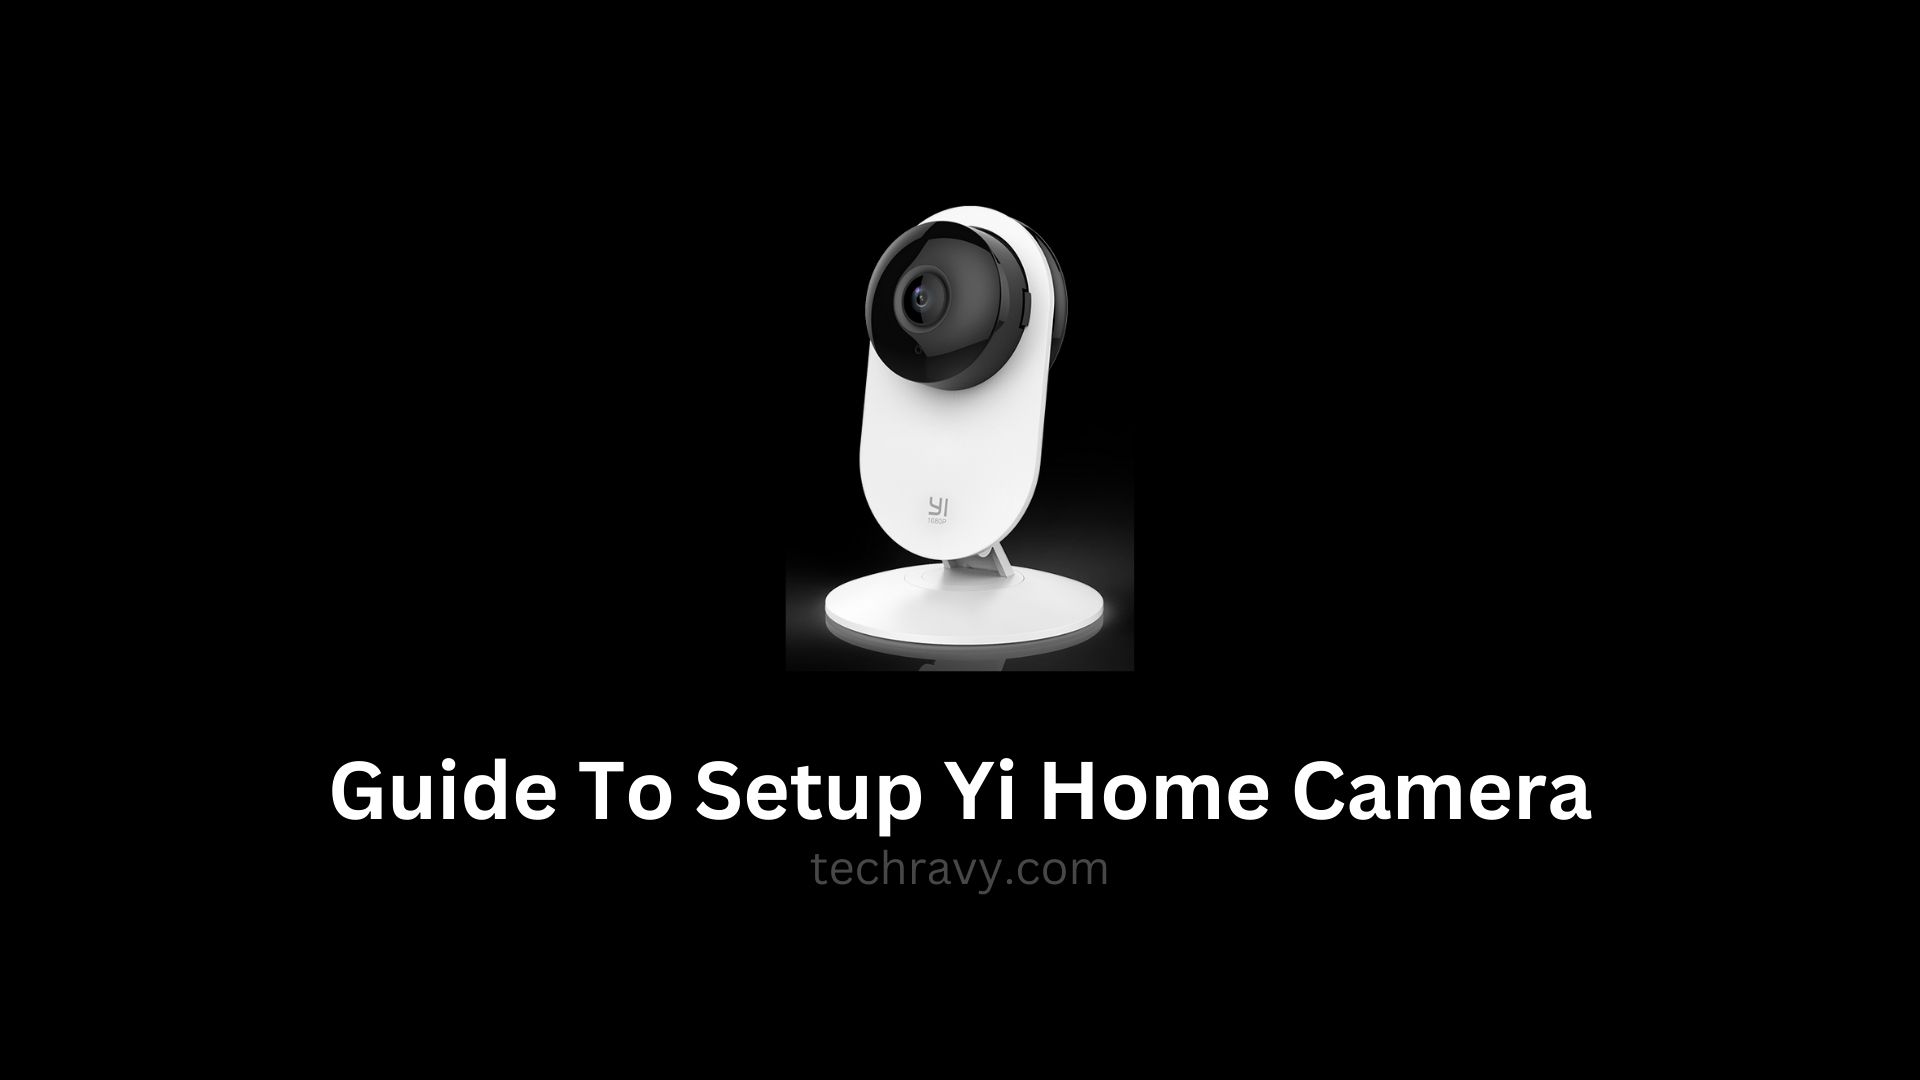 Guide To Setup Yi Home Camera